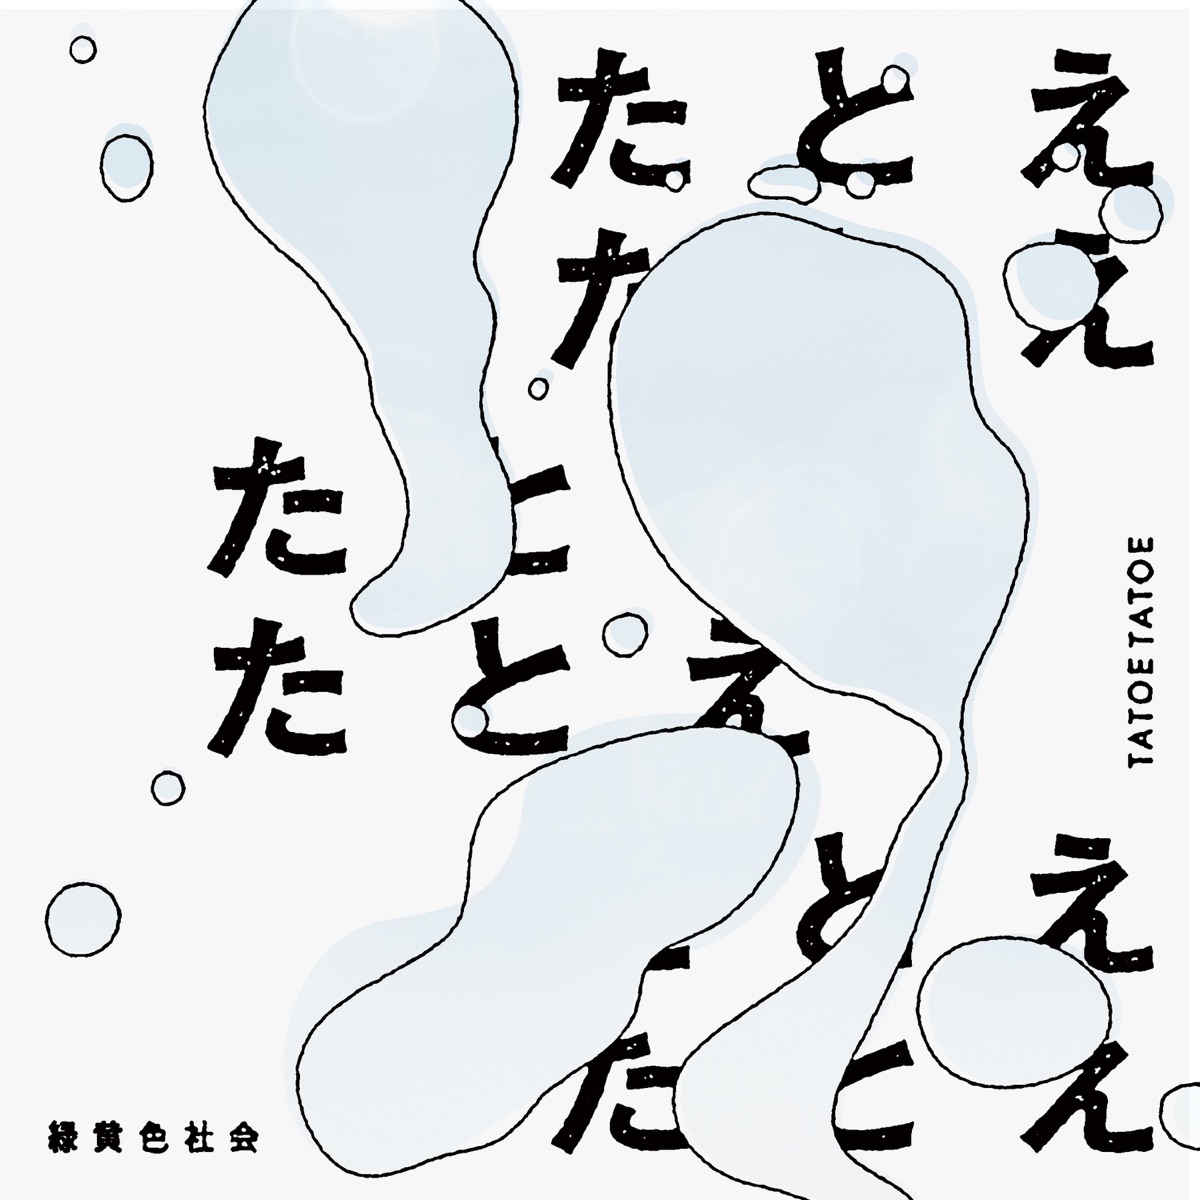 Cover for『Ryokuoushoku Shakai - Tatoe Tatoe』from the release『Tatoe Tatoe』